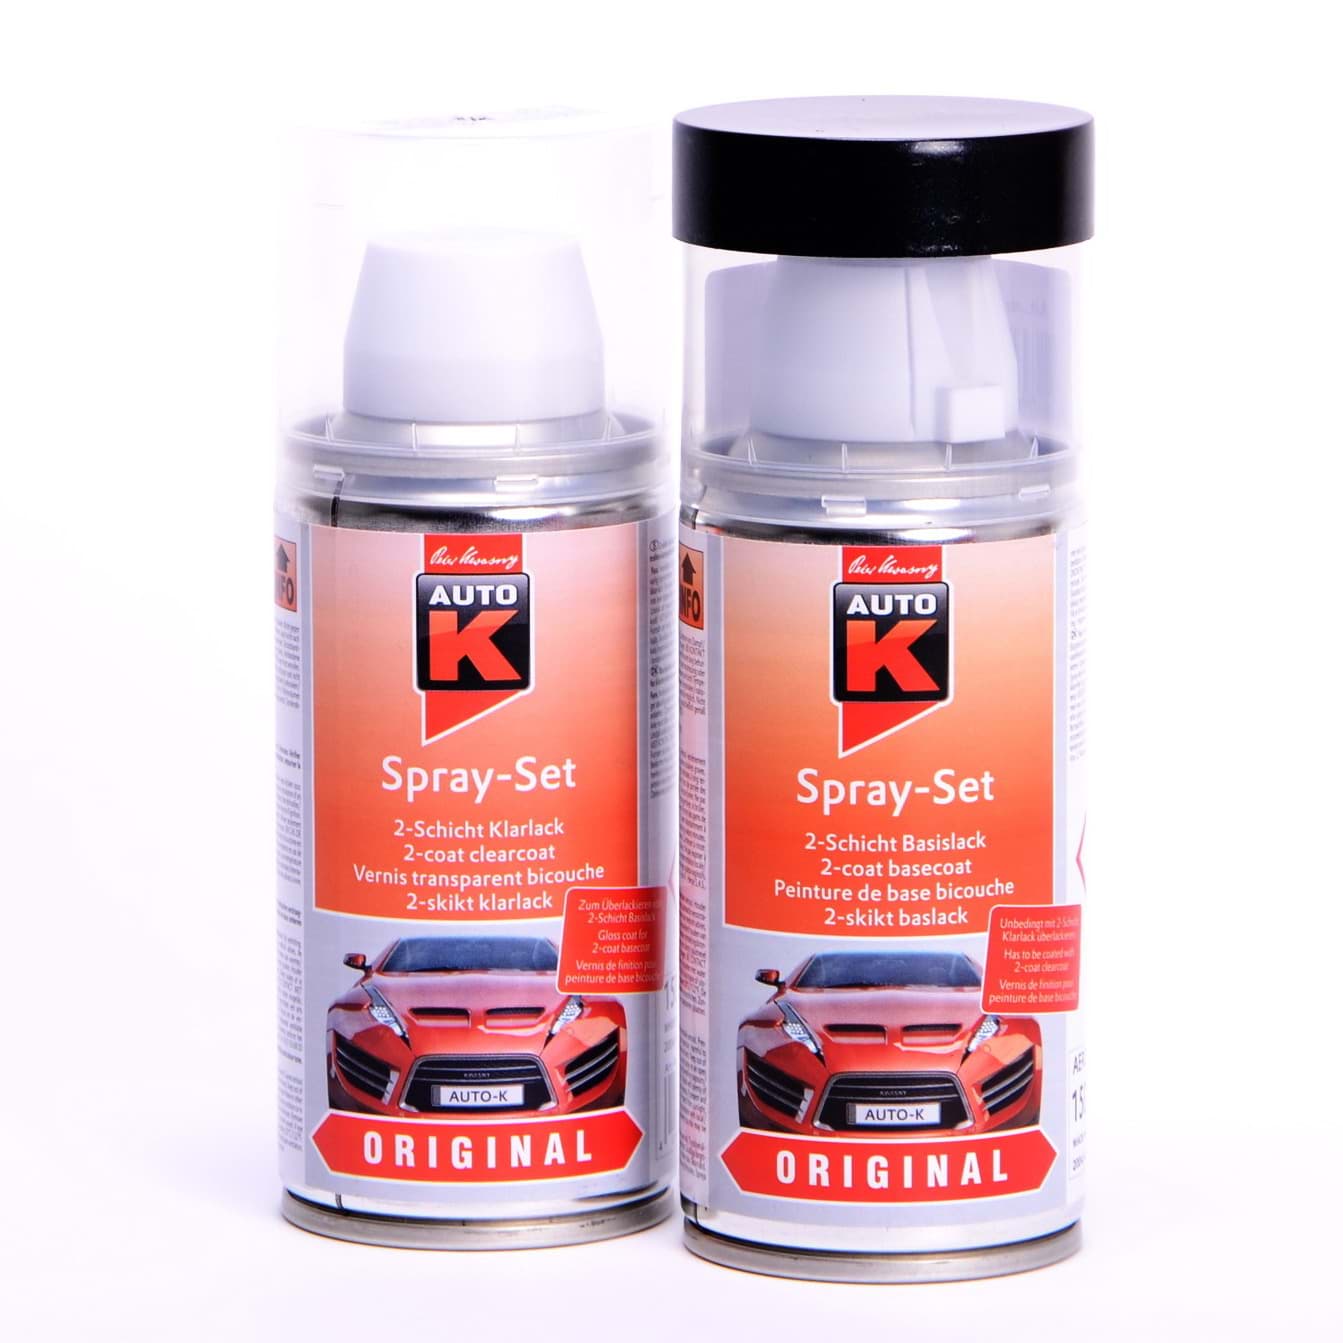 Afbeelding van Auto-K Spray-Set Autolack für Renault B66 Gris Eclipse met 43449